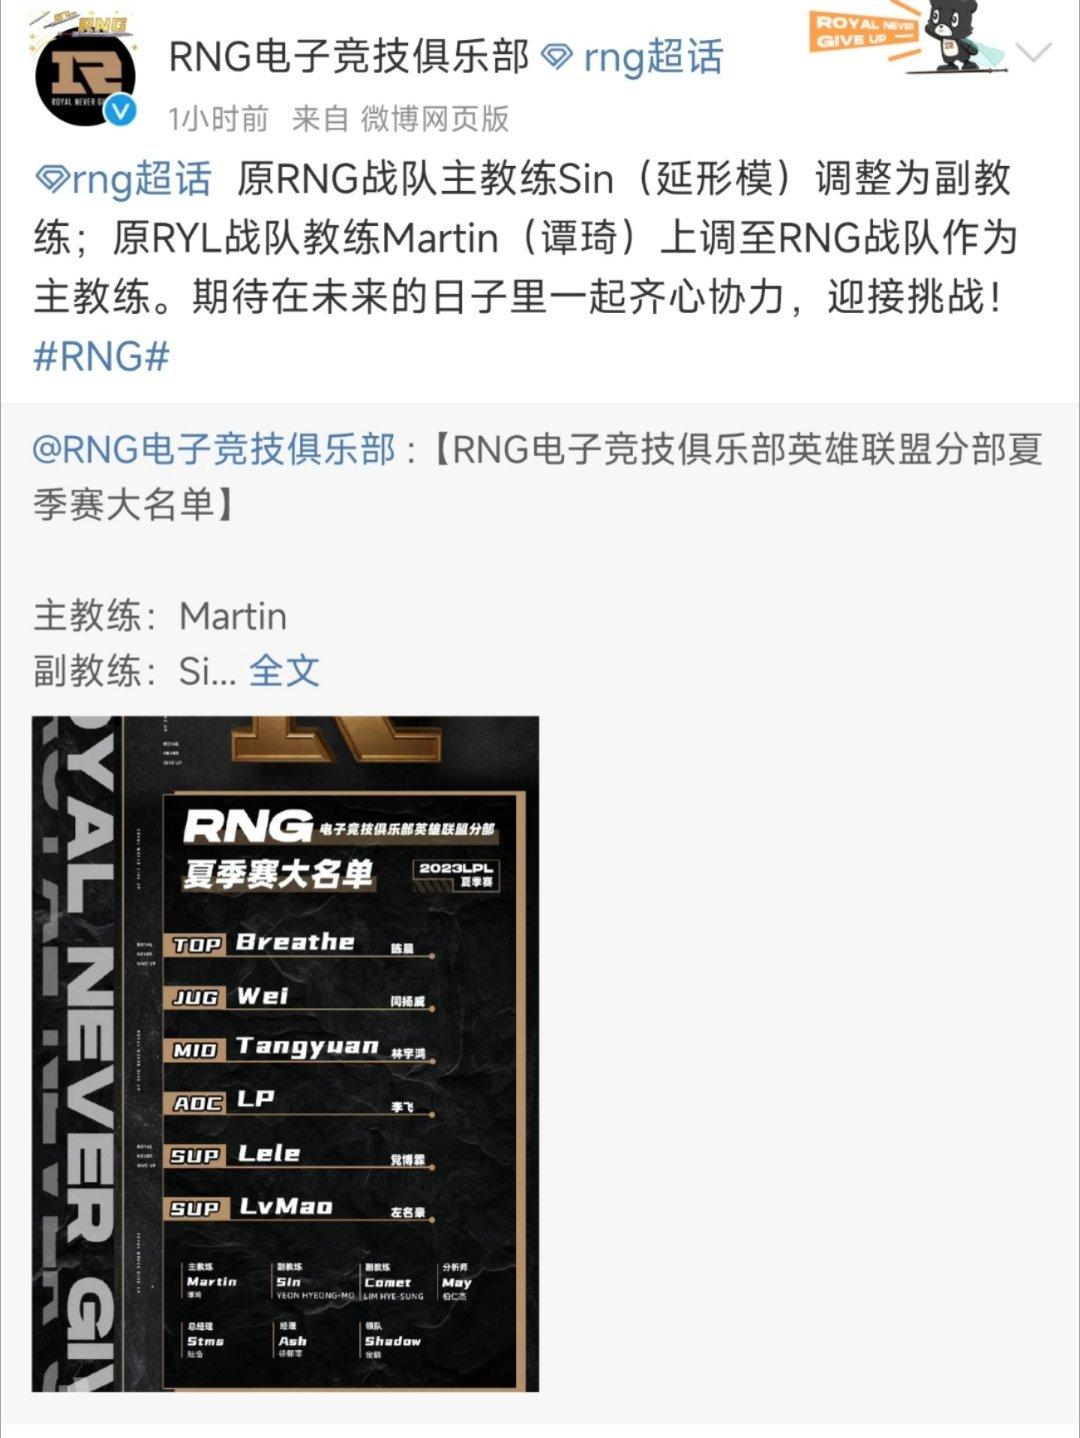 【RNG教练调整：Sin为副教练 Martin为主教练】

@RNG电子竞技俱乐